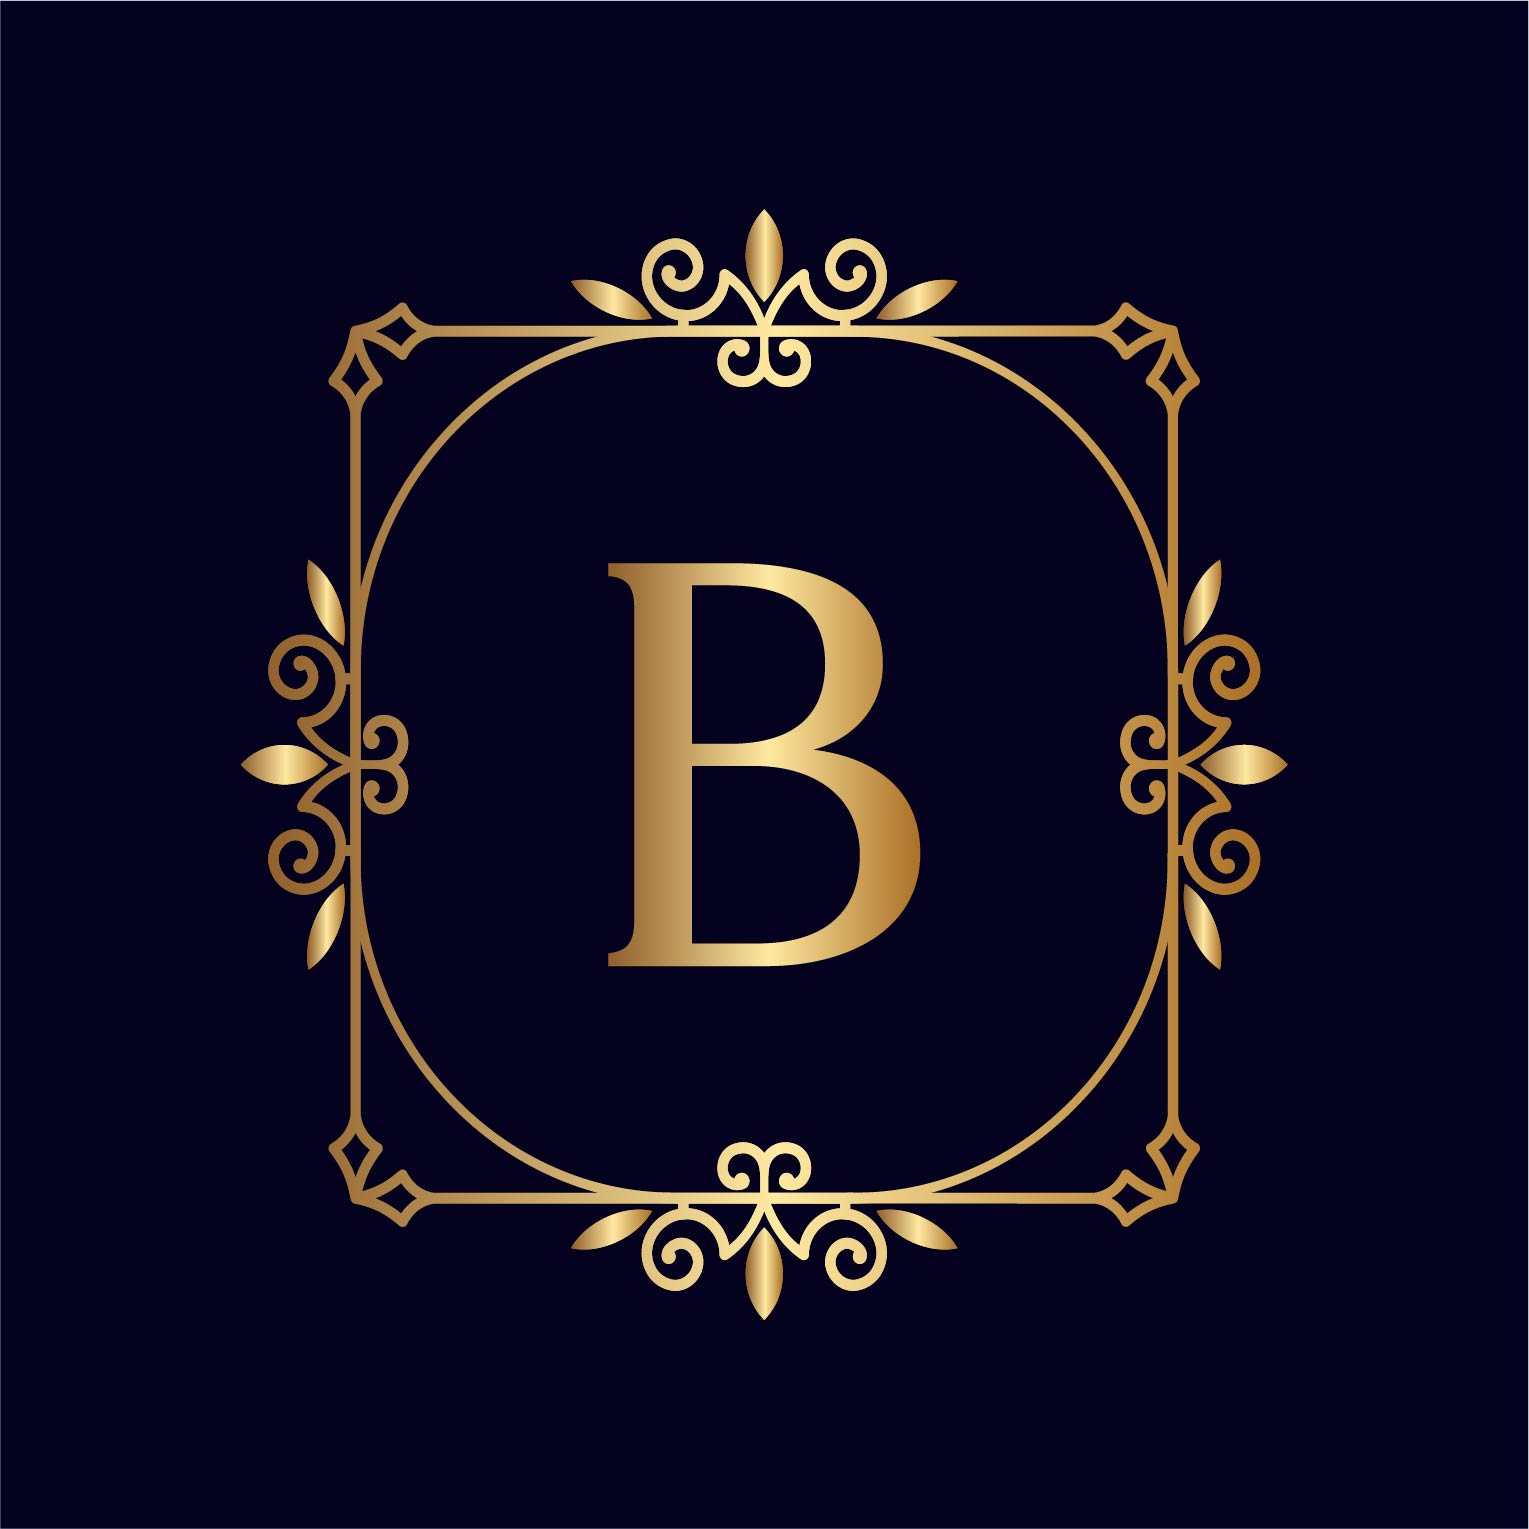 Artistic Gold Letter B Logos Design preview image.